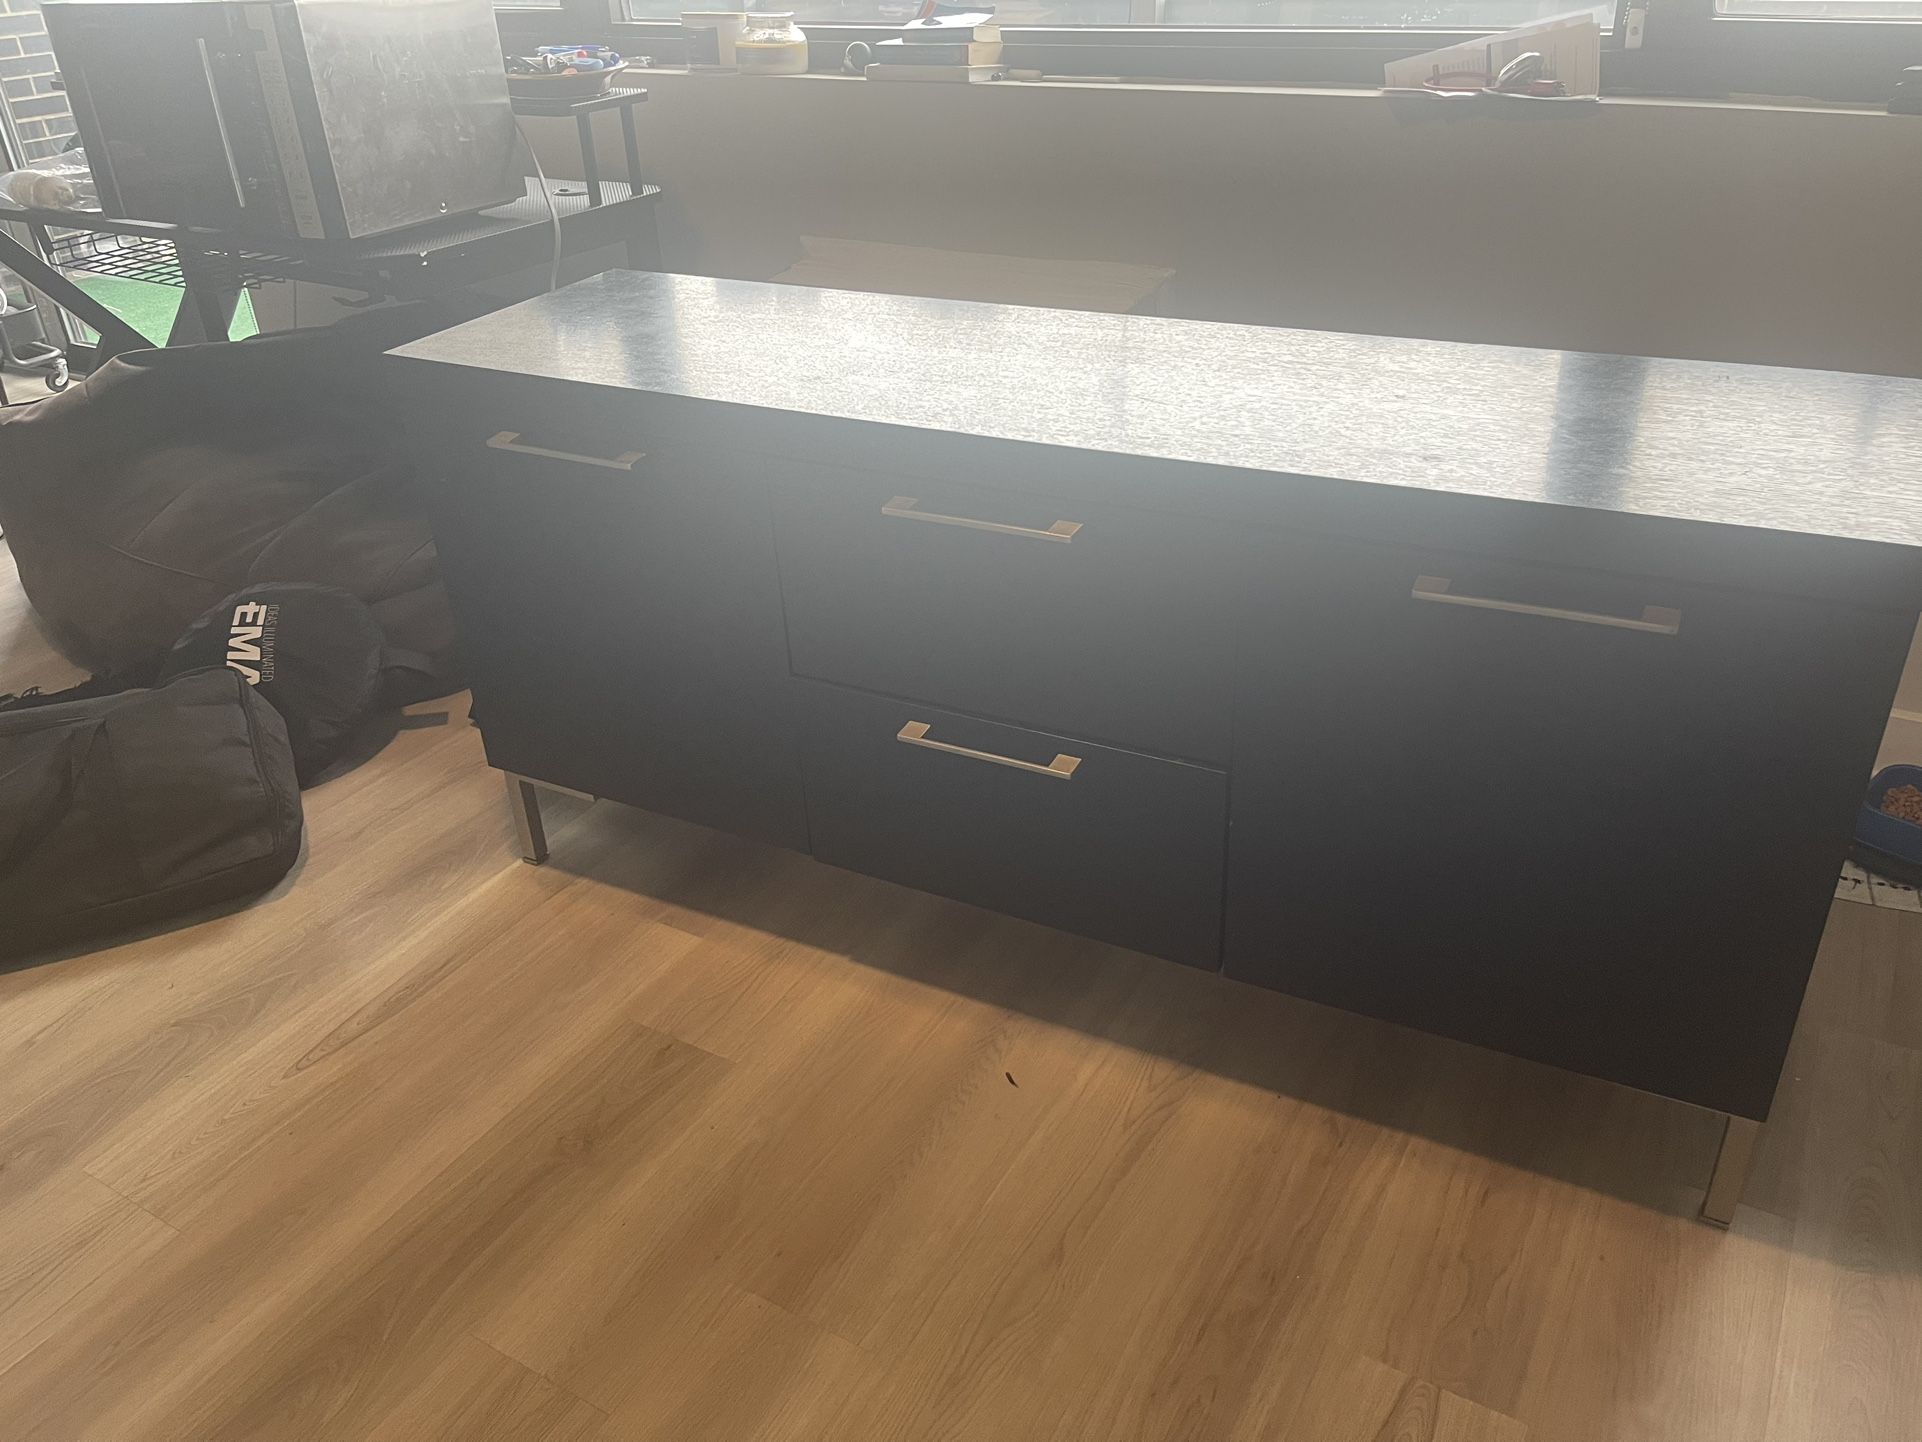 Black Dresser/Entertainment Table